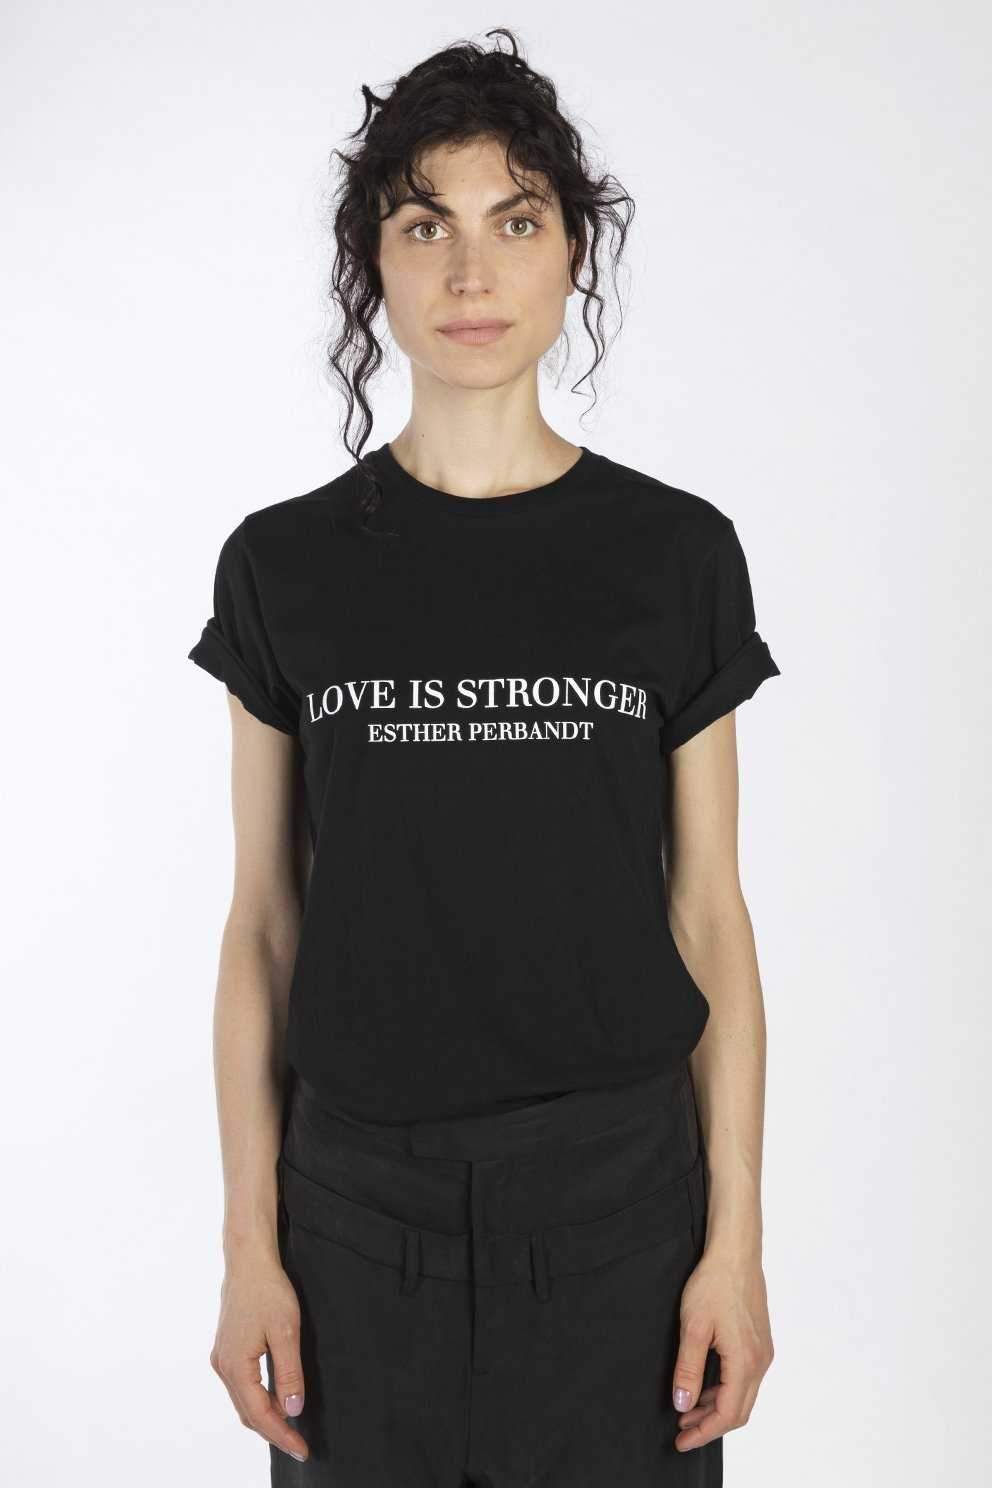 LOVE IS STRONGER - Esther Perbandt T-shirt | esther perbandt